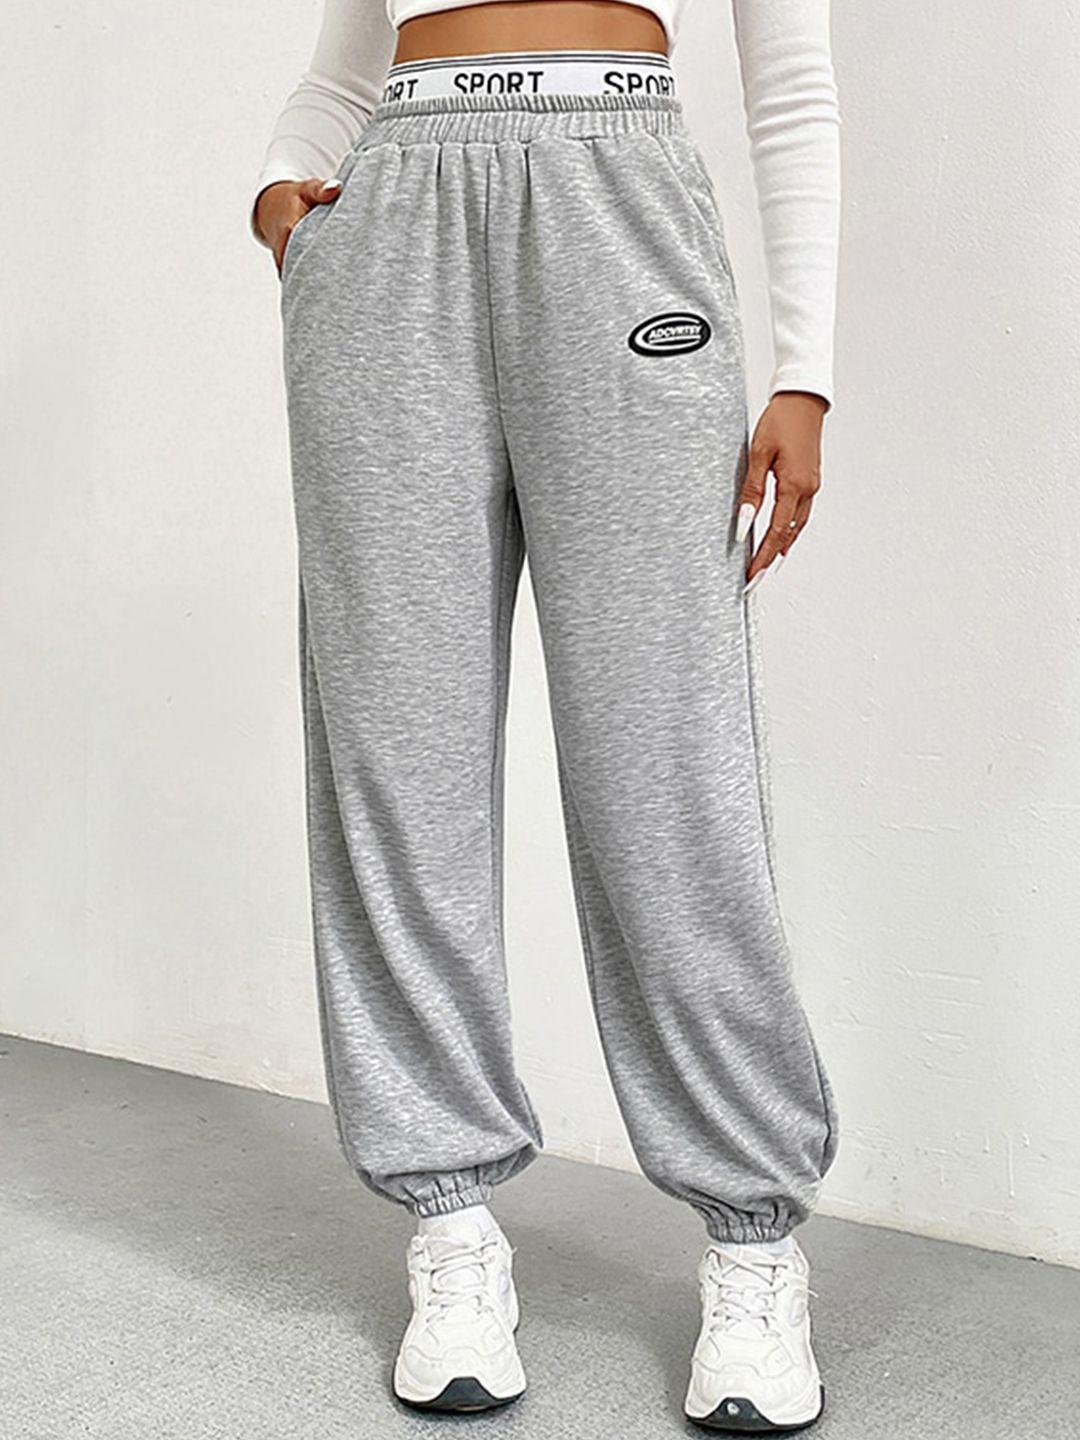 stylecast women grey trousers